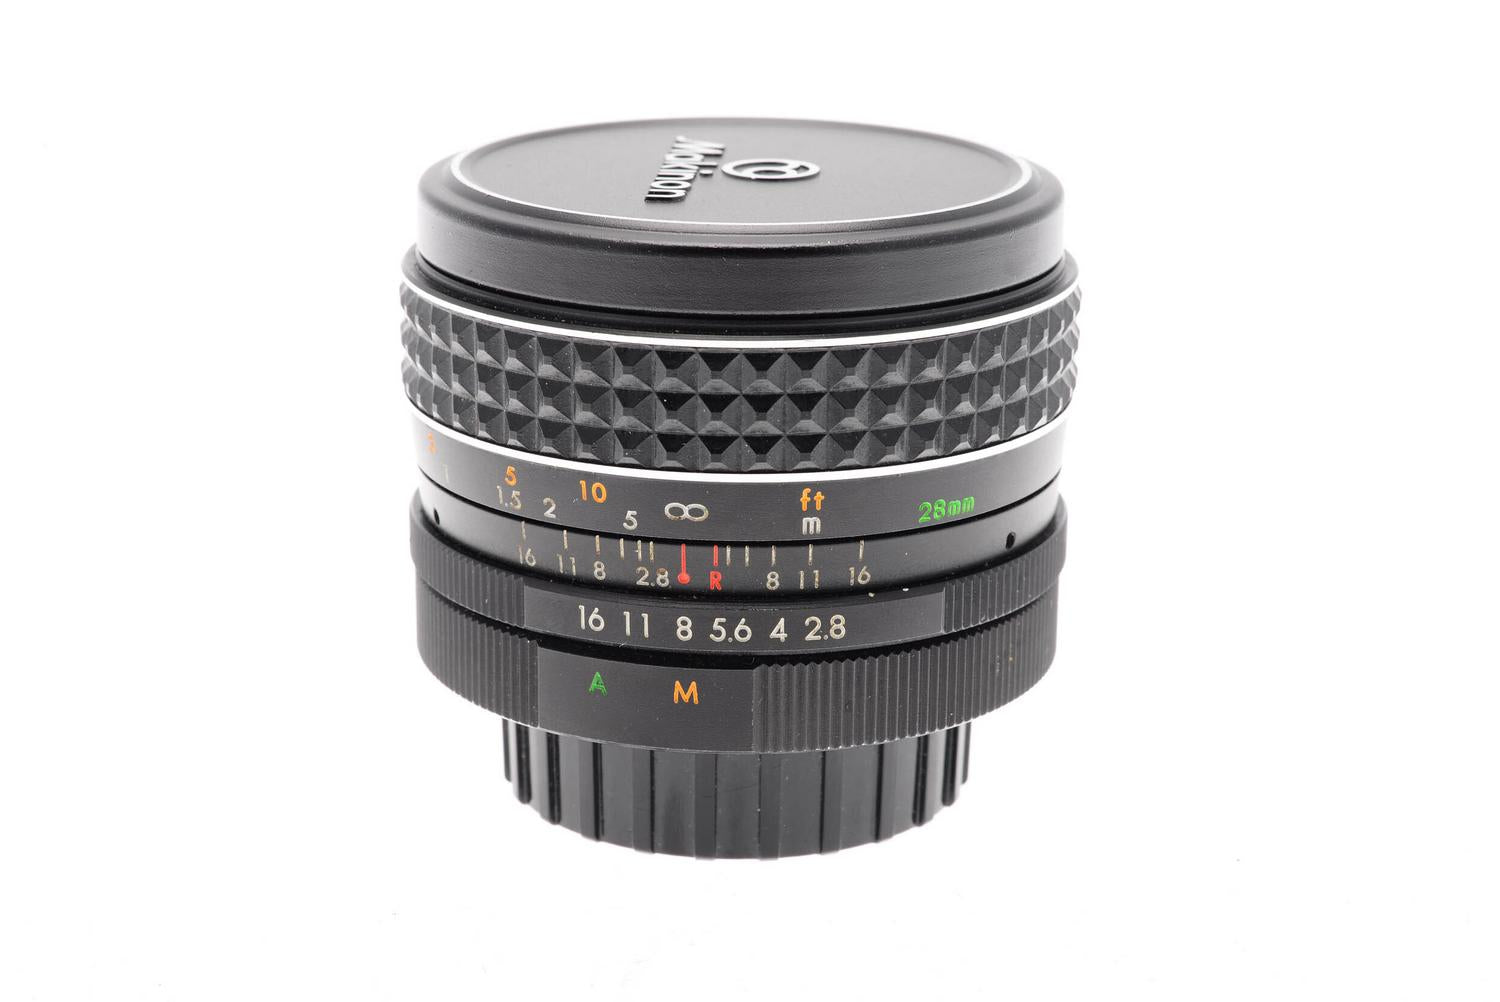 Makinon 28mm f2.8 Auto Multi-Coated - Lens – Kamerastore